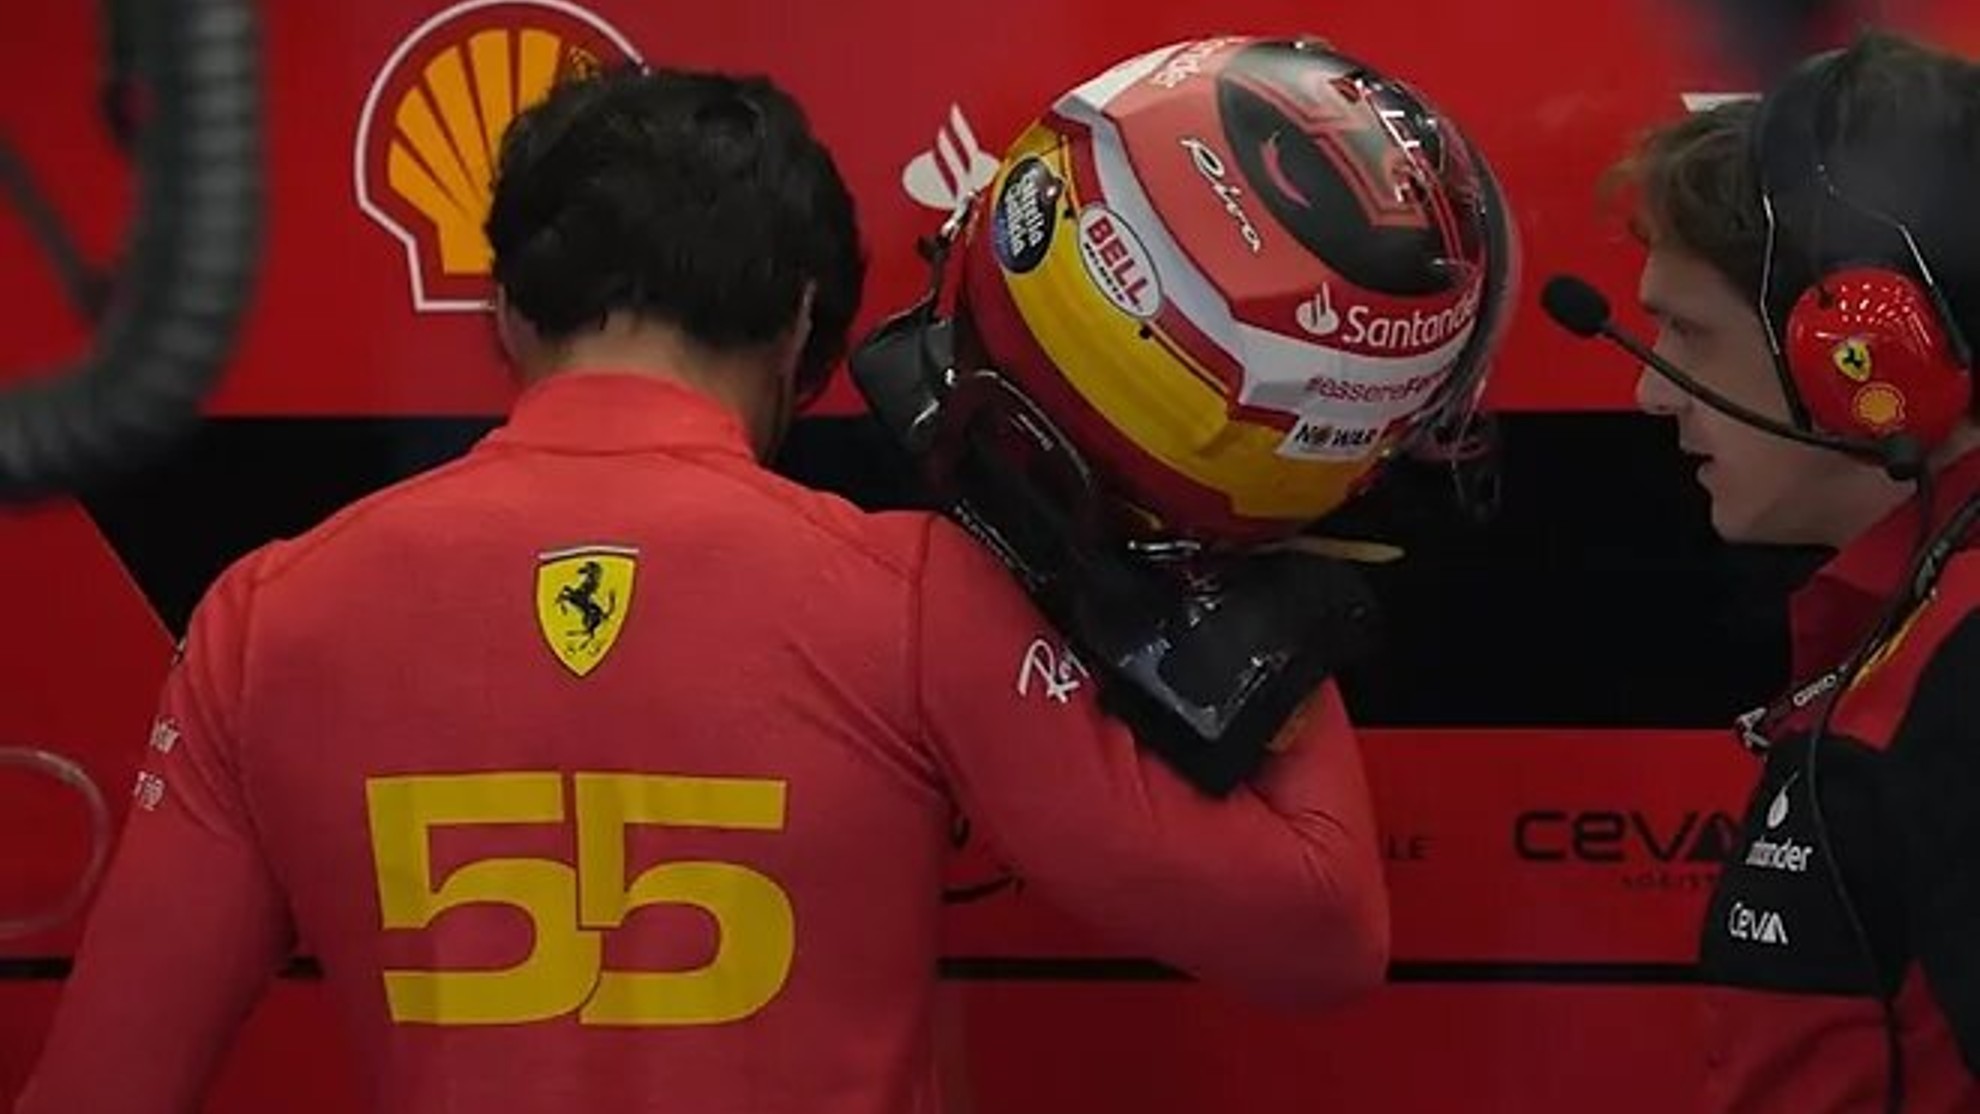 El piloto español en el box de Ferrari en Spa.